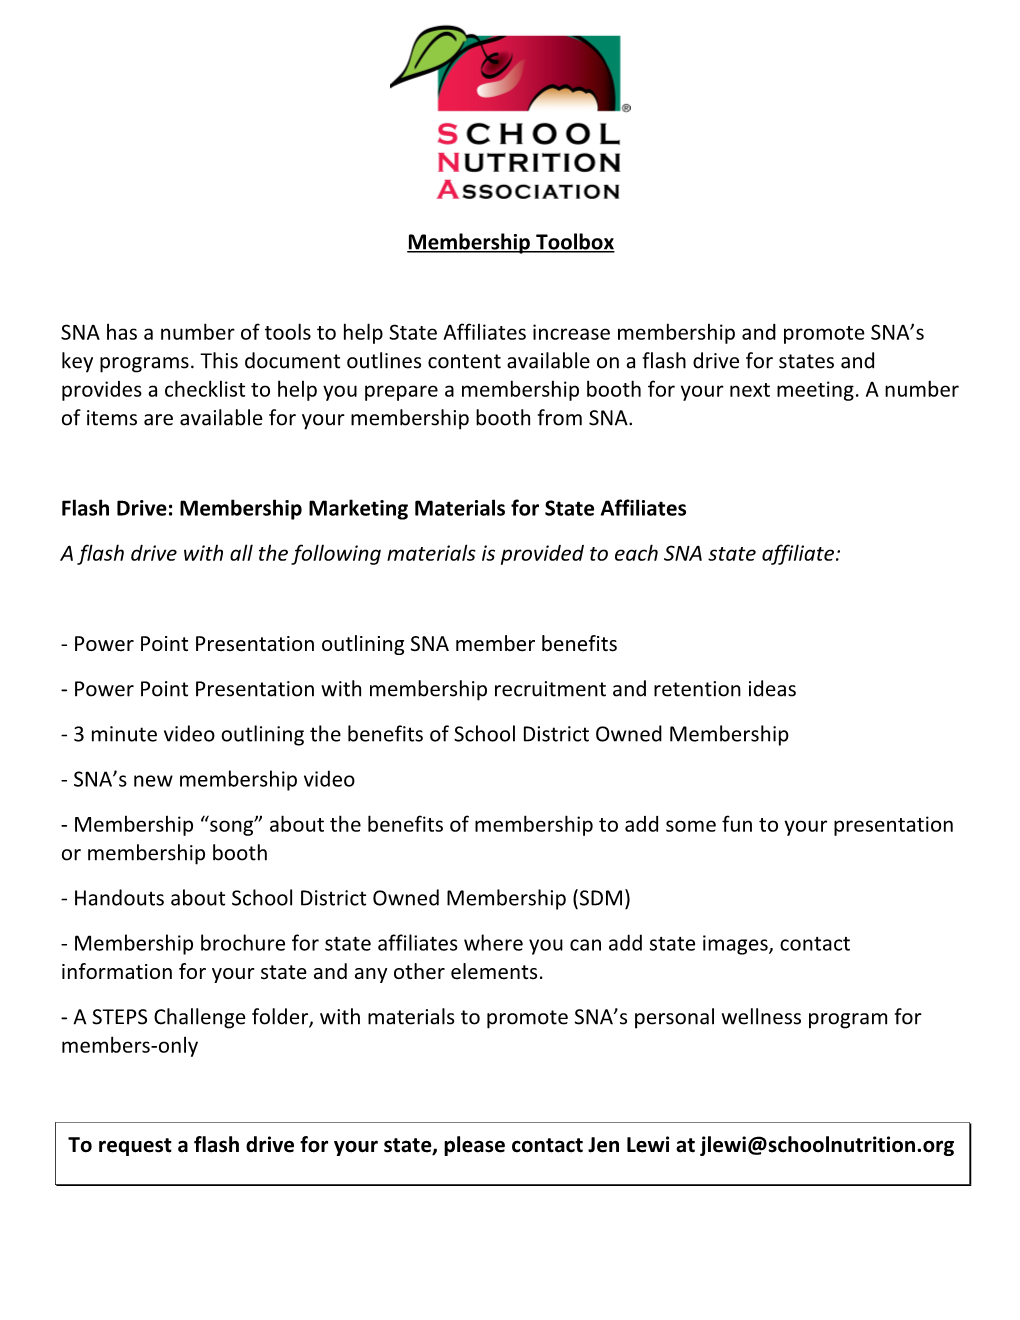 Flash Drive: Membership Marketing Materials for State Affiliates